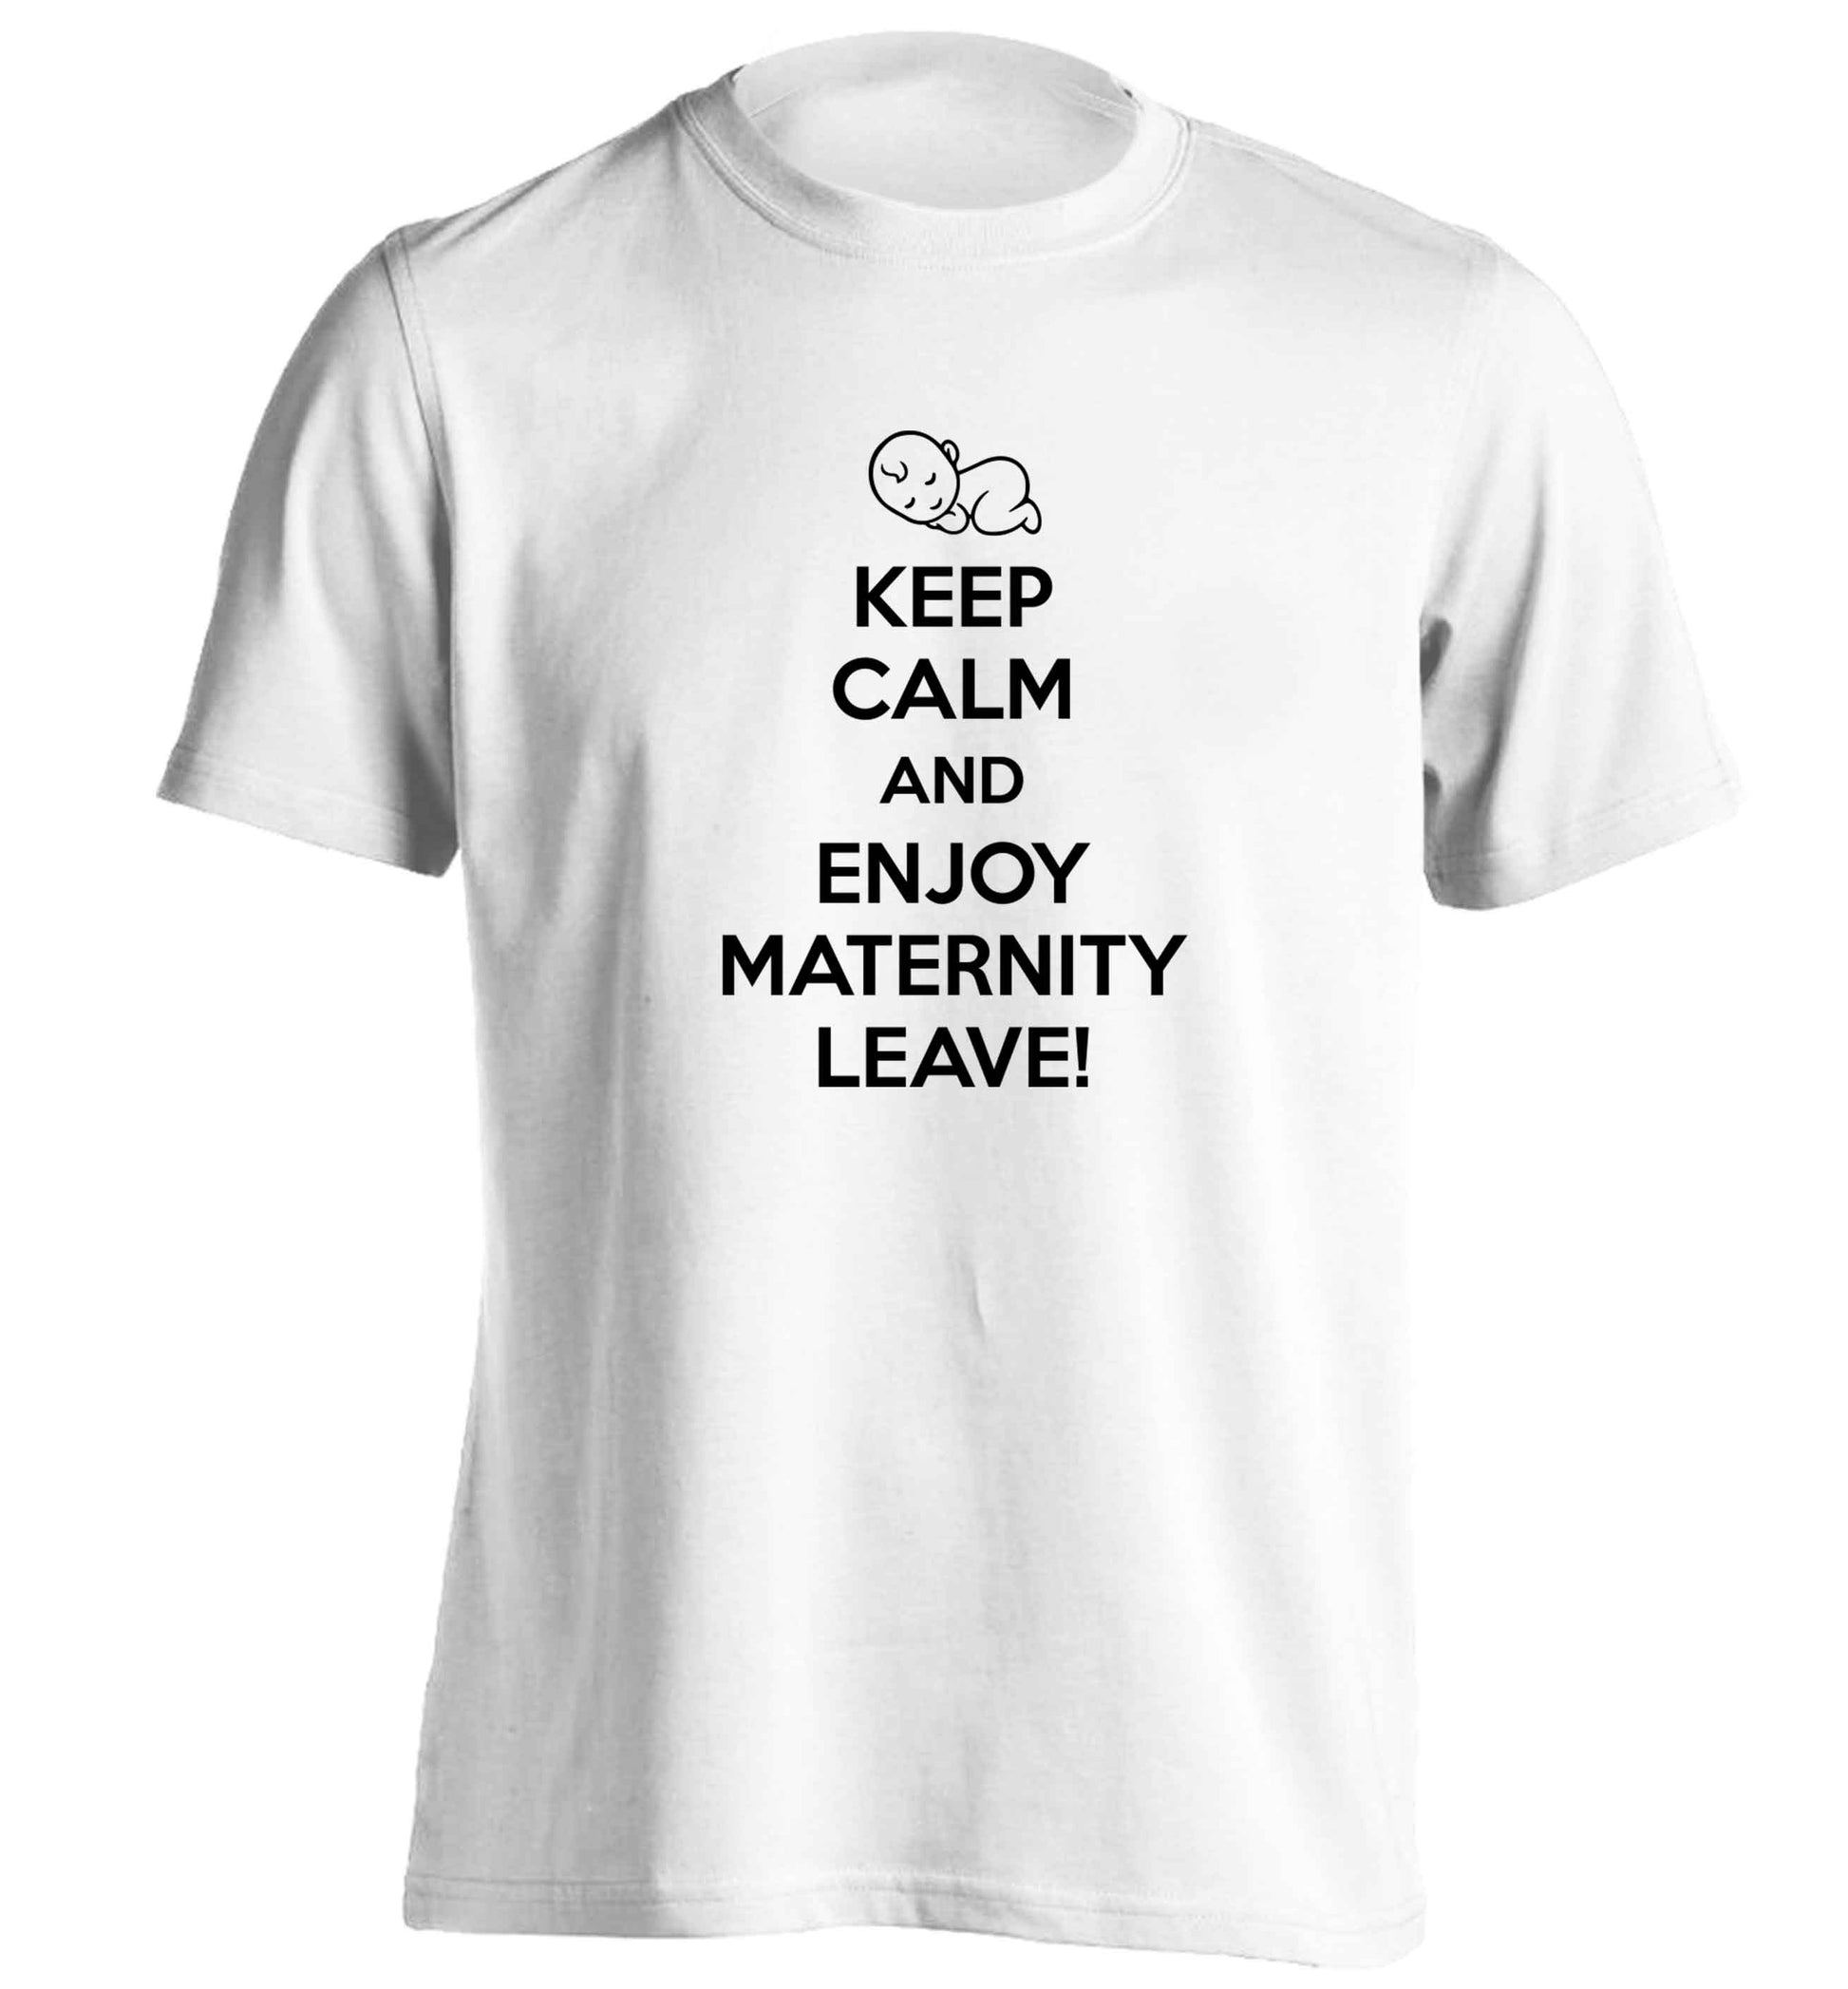 Keep calm and enjoy maternity leave adults unisex white Tshirt 2XL